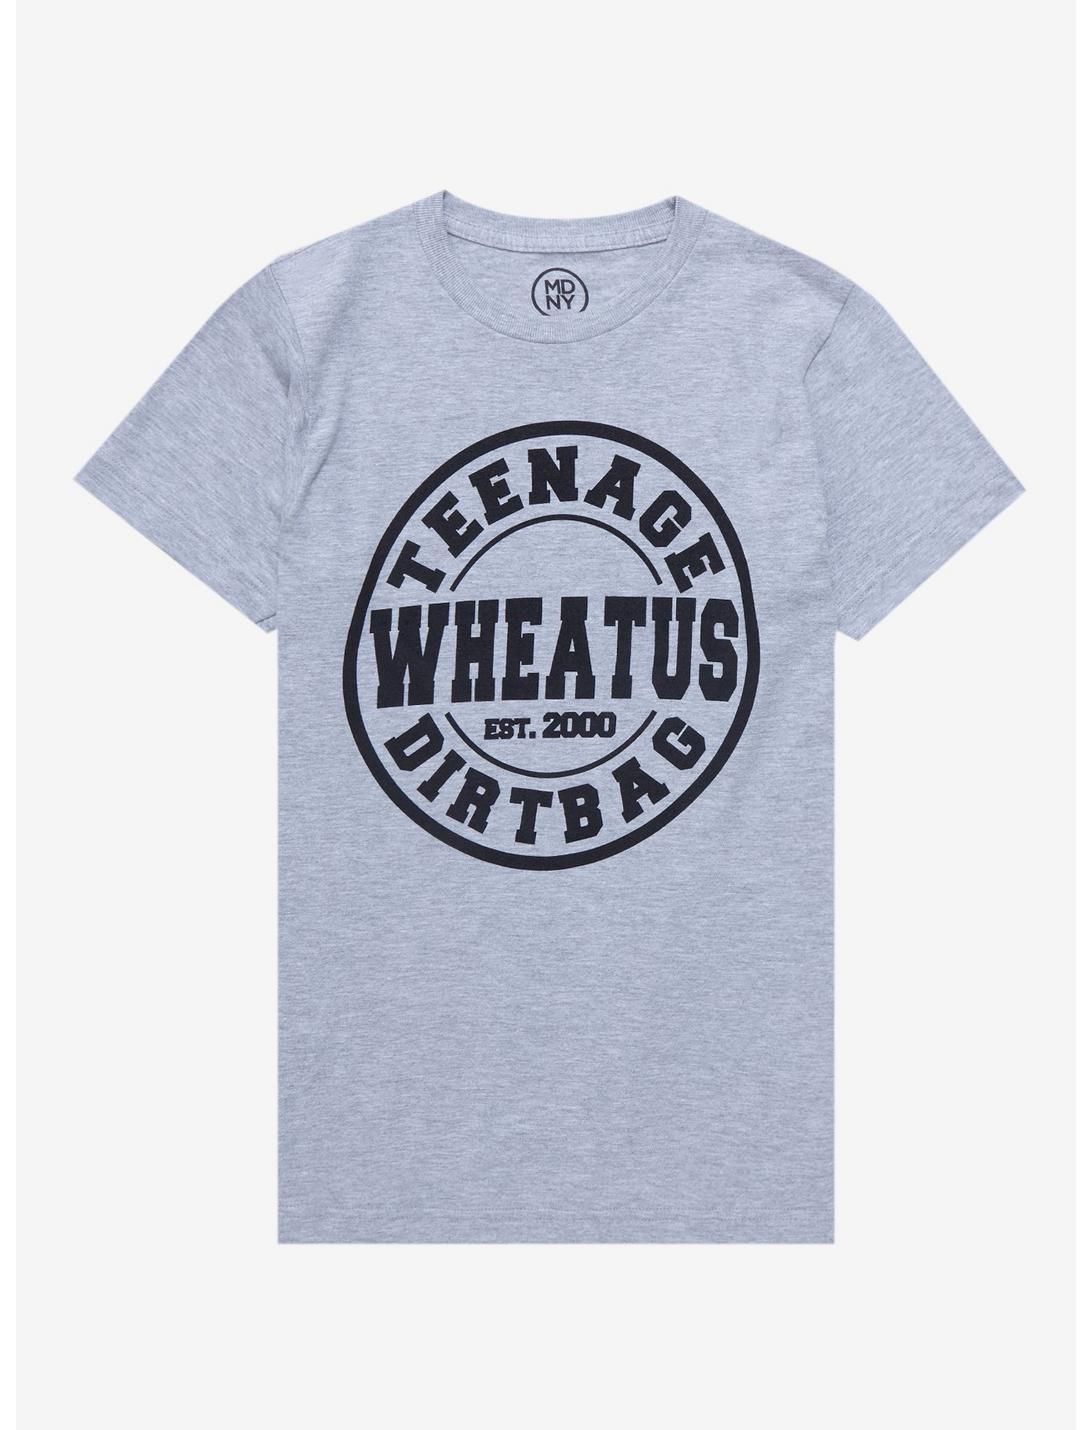 Wheatus Teenage Dirtbag Boyfriend Fit Girls T-Shirt, OATMEAL, hi-res